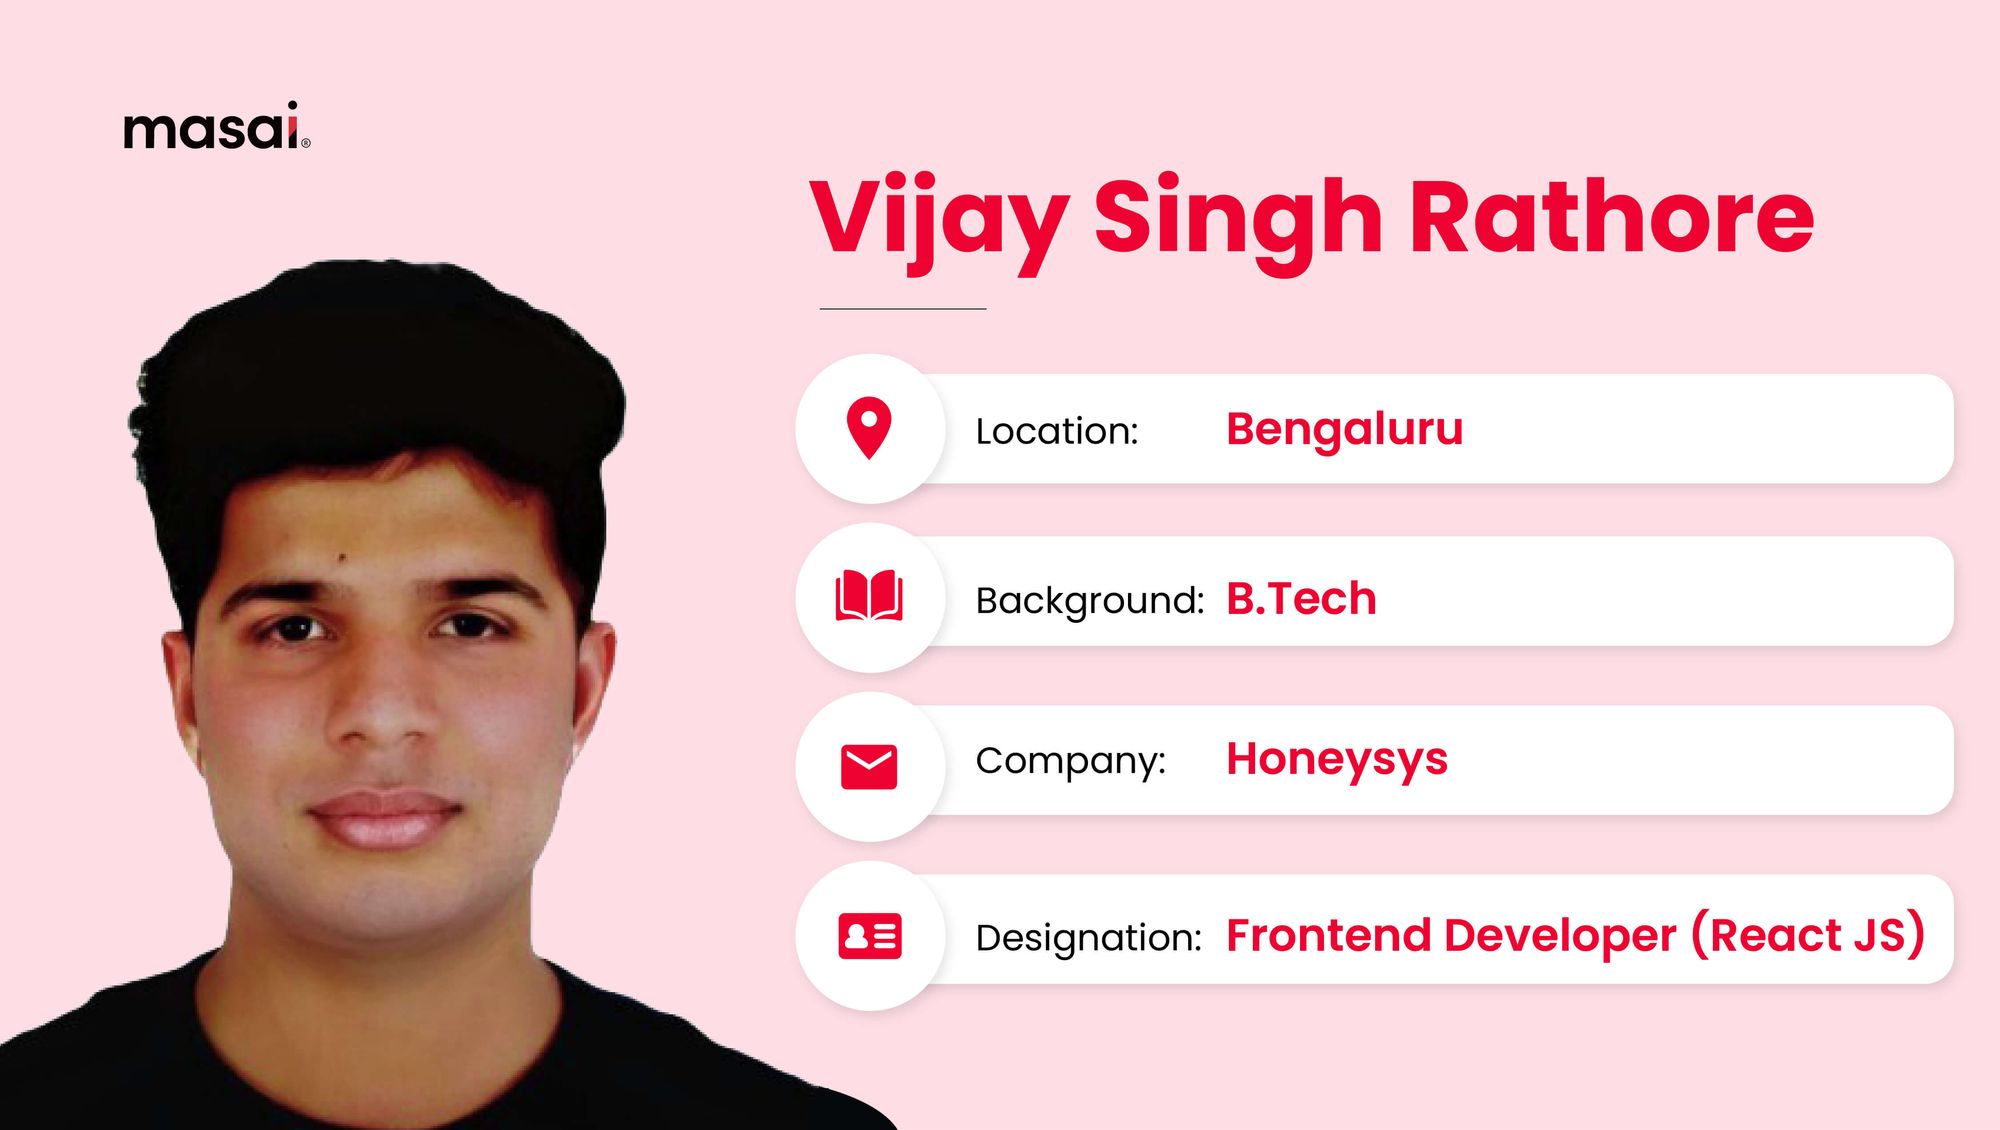 Vijay Singh - A Masai graduate now working as Frontend developer at Honeysys